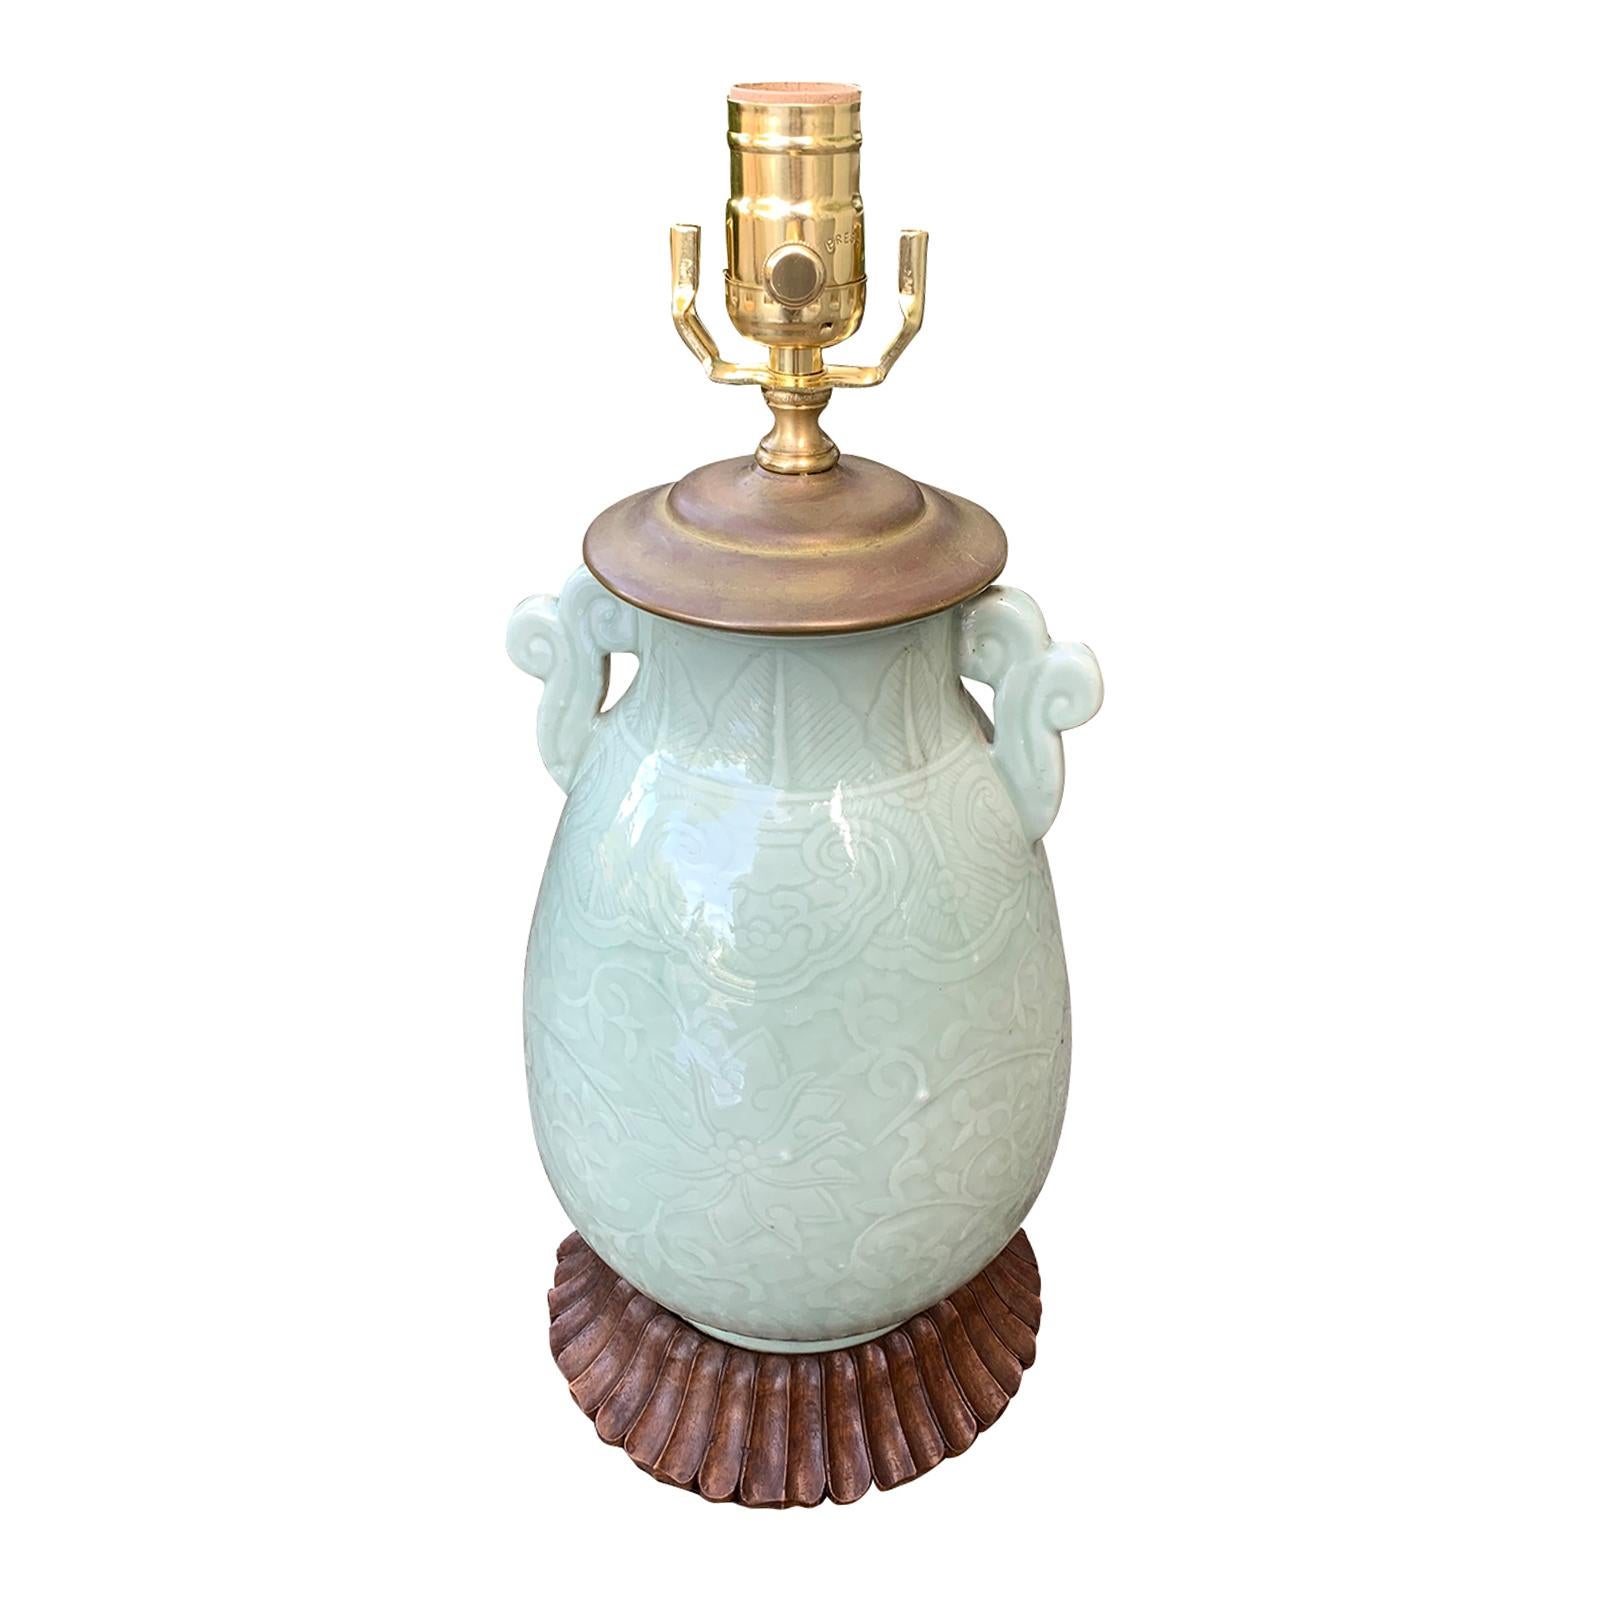 19th Century Chinese Celadon Glazed Porcelain Lamp with Old Base, Signed